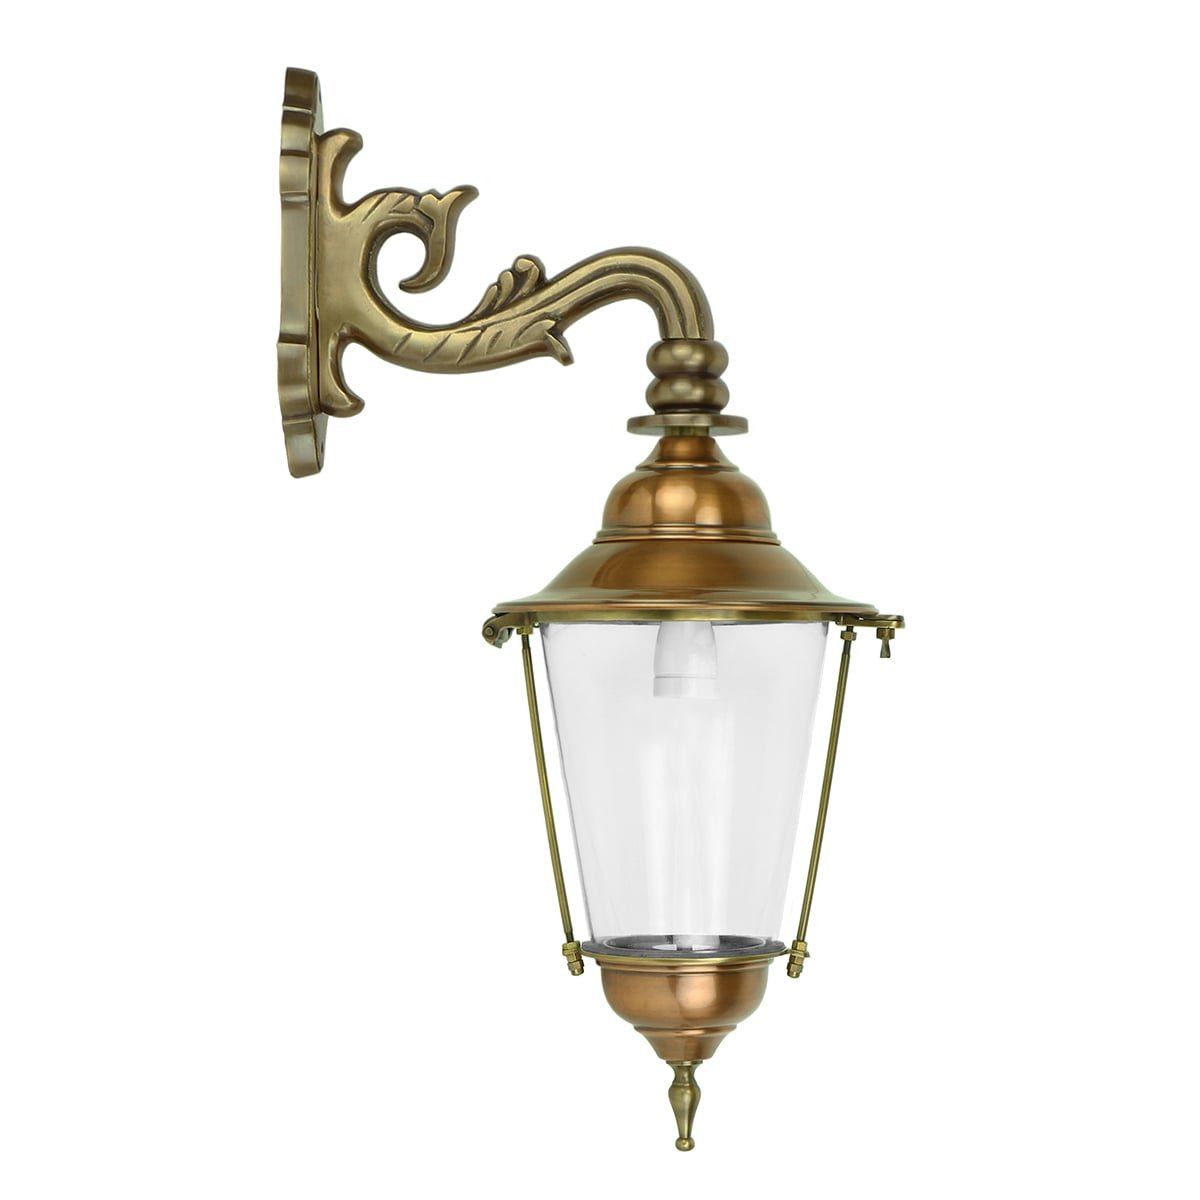 Lantaarn lamp buiten Bourtange brons - 55 cm